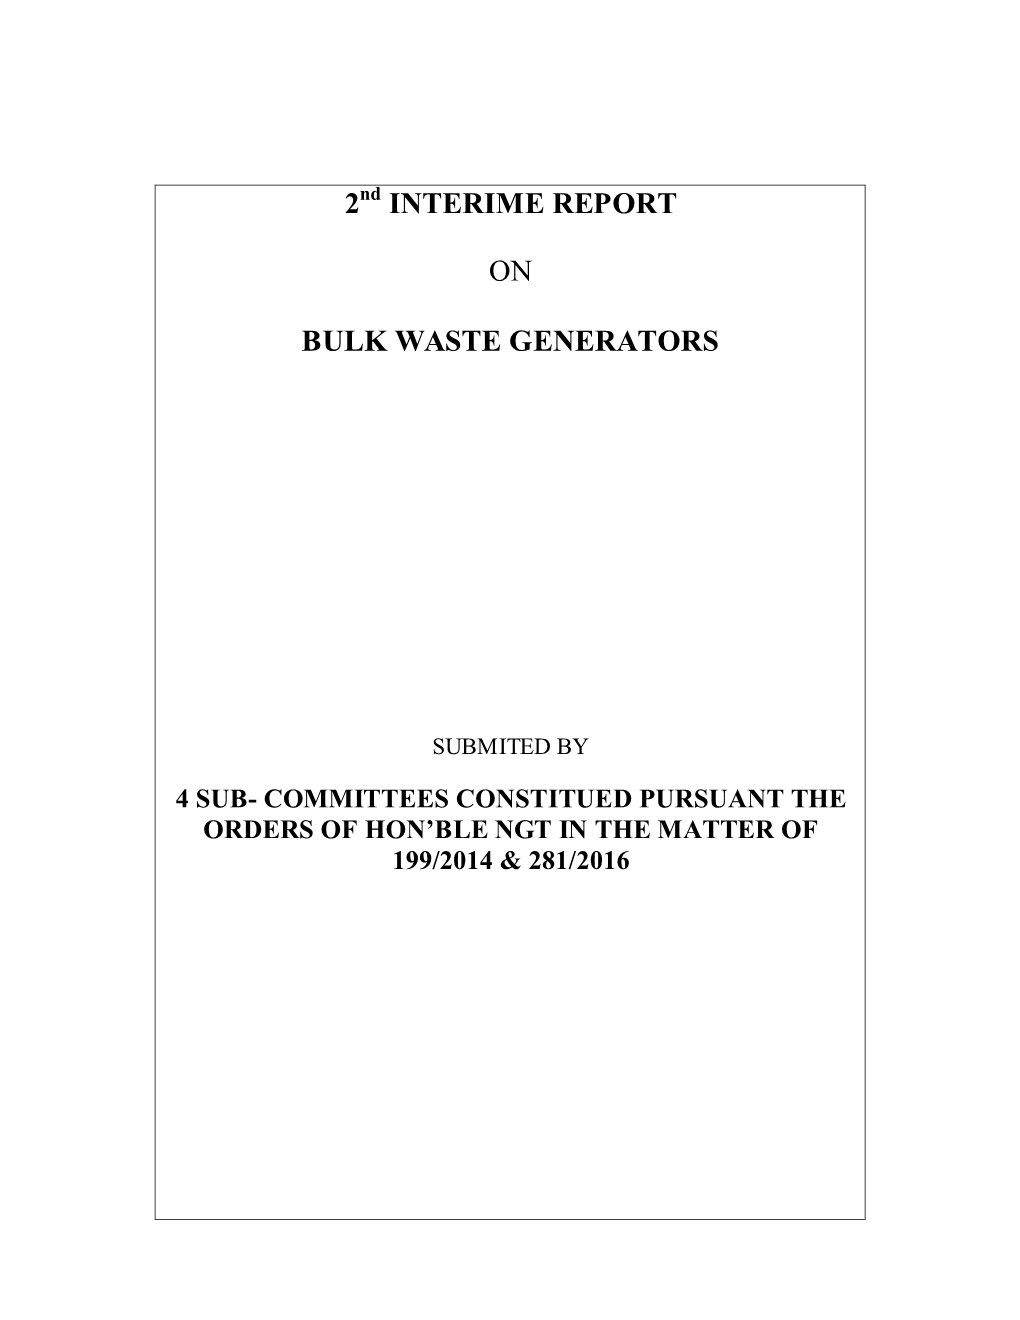 2 Interime Report on Bulk Waste Generators